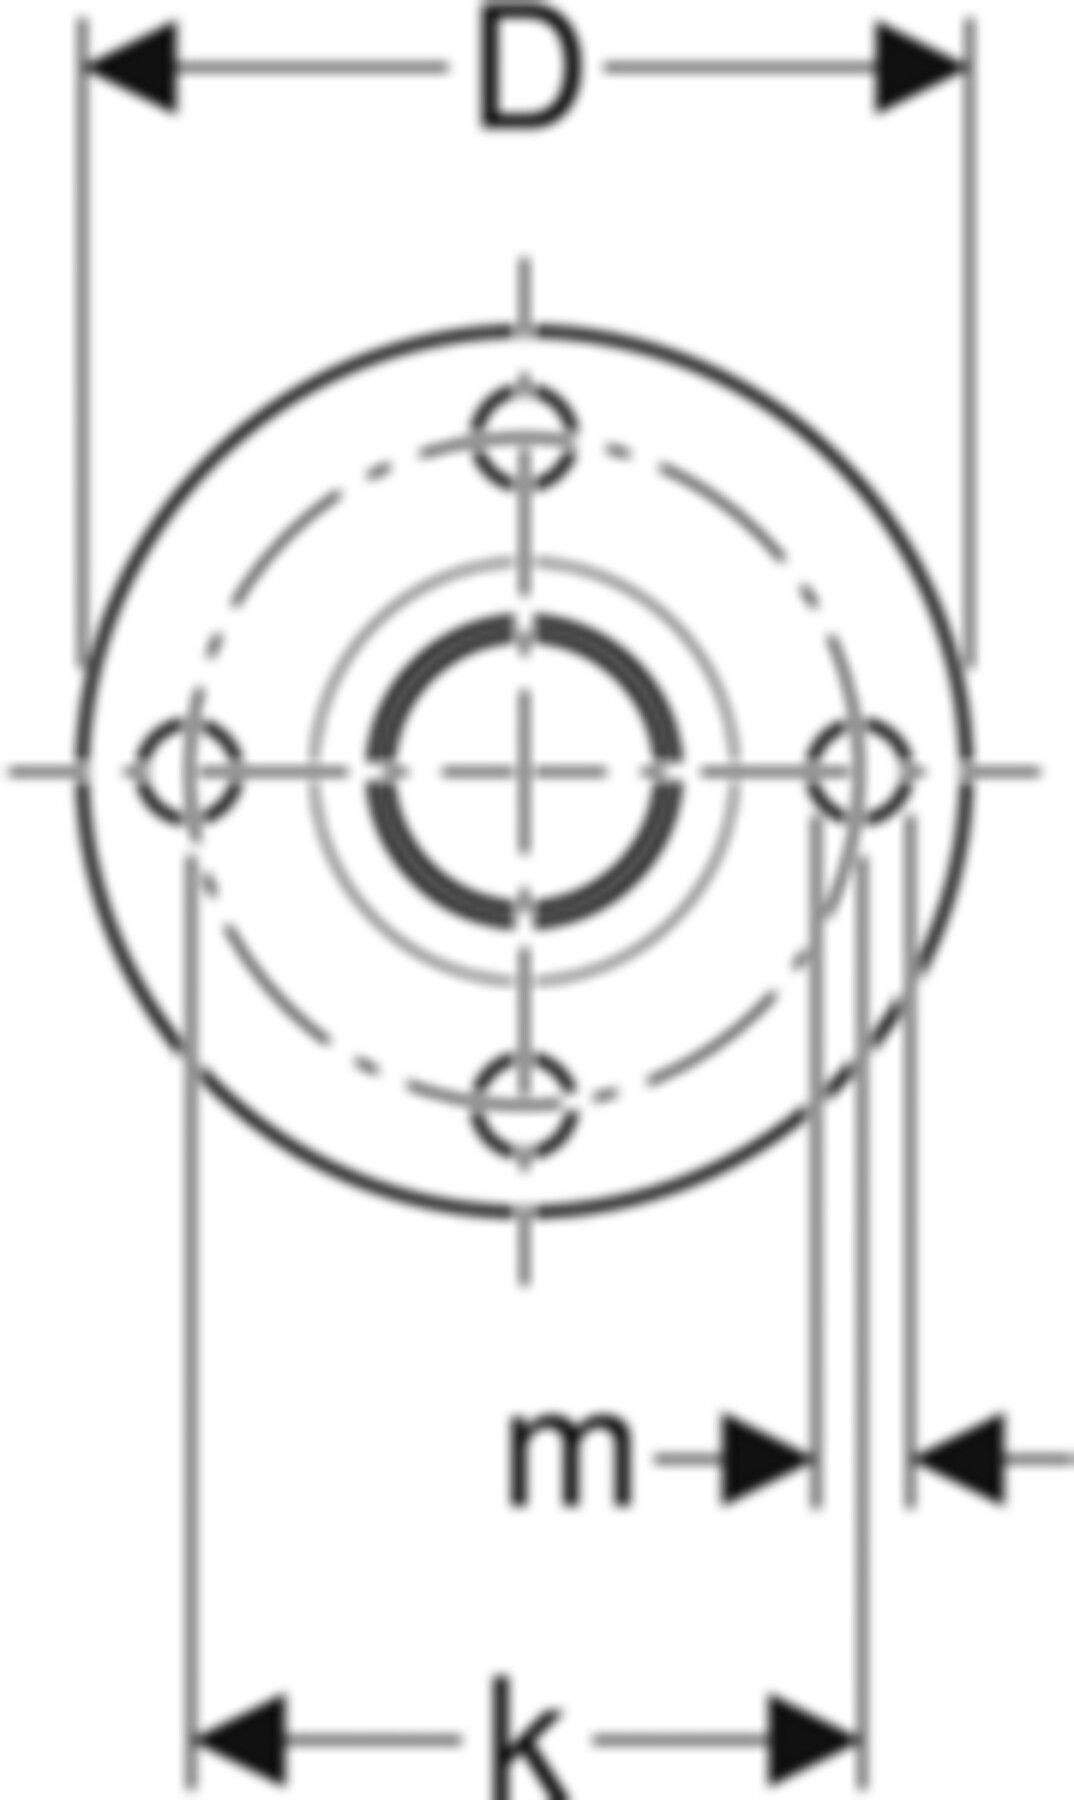 Flansch m/Steckende PN10/16 54mm 23788 - Mapress-Heizungs-Formstücke